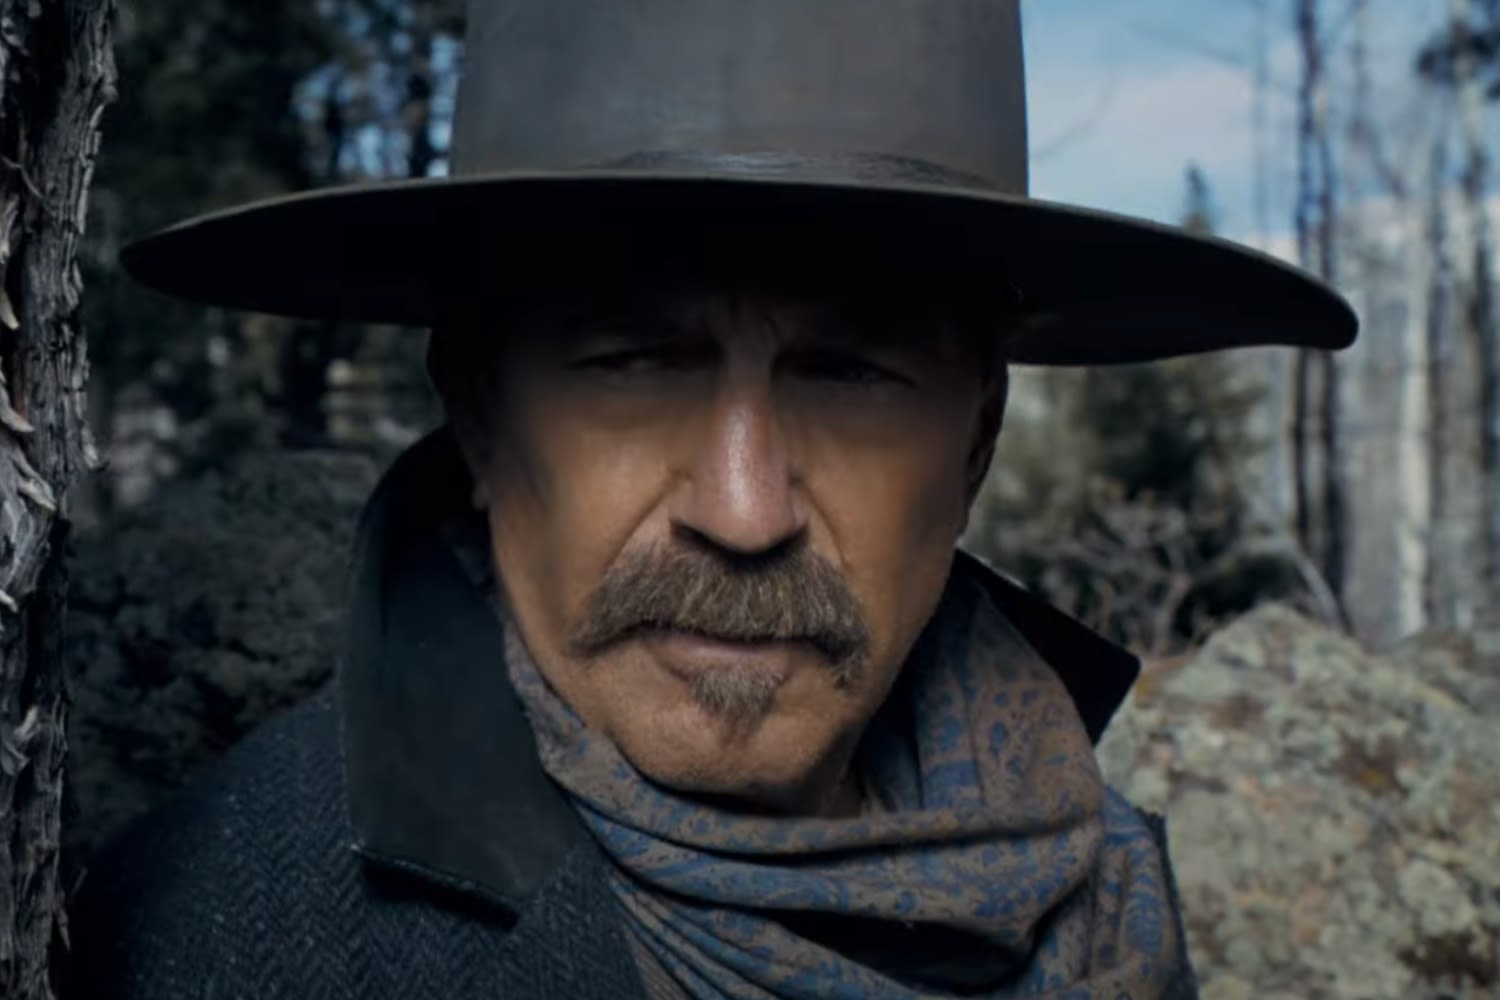 Horizon: An American Saga trailer previews Kevin Costner’s epic Western movie